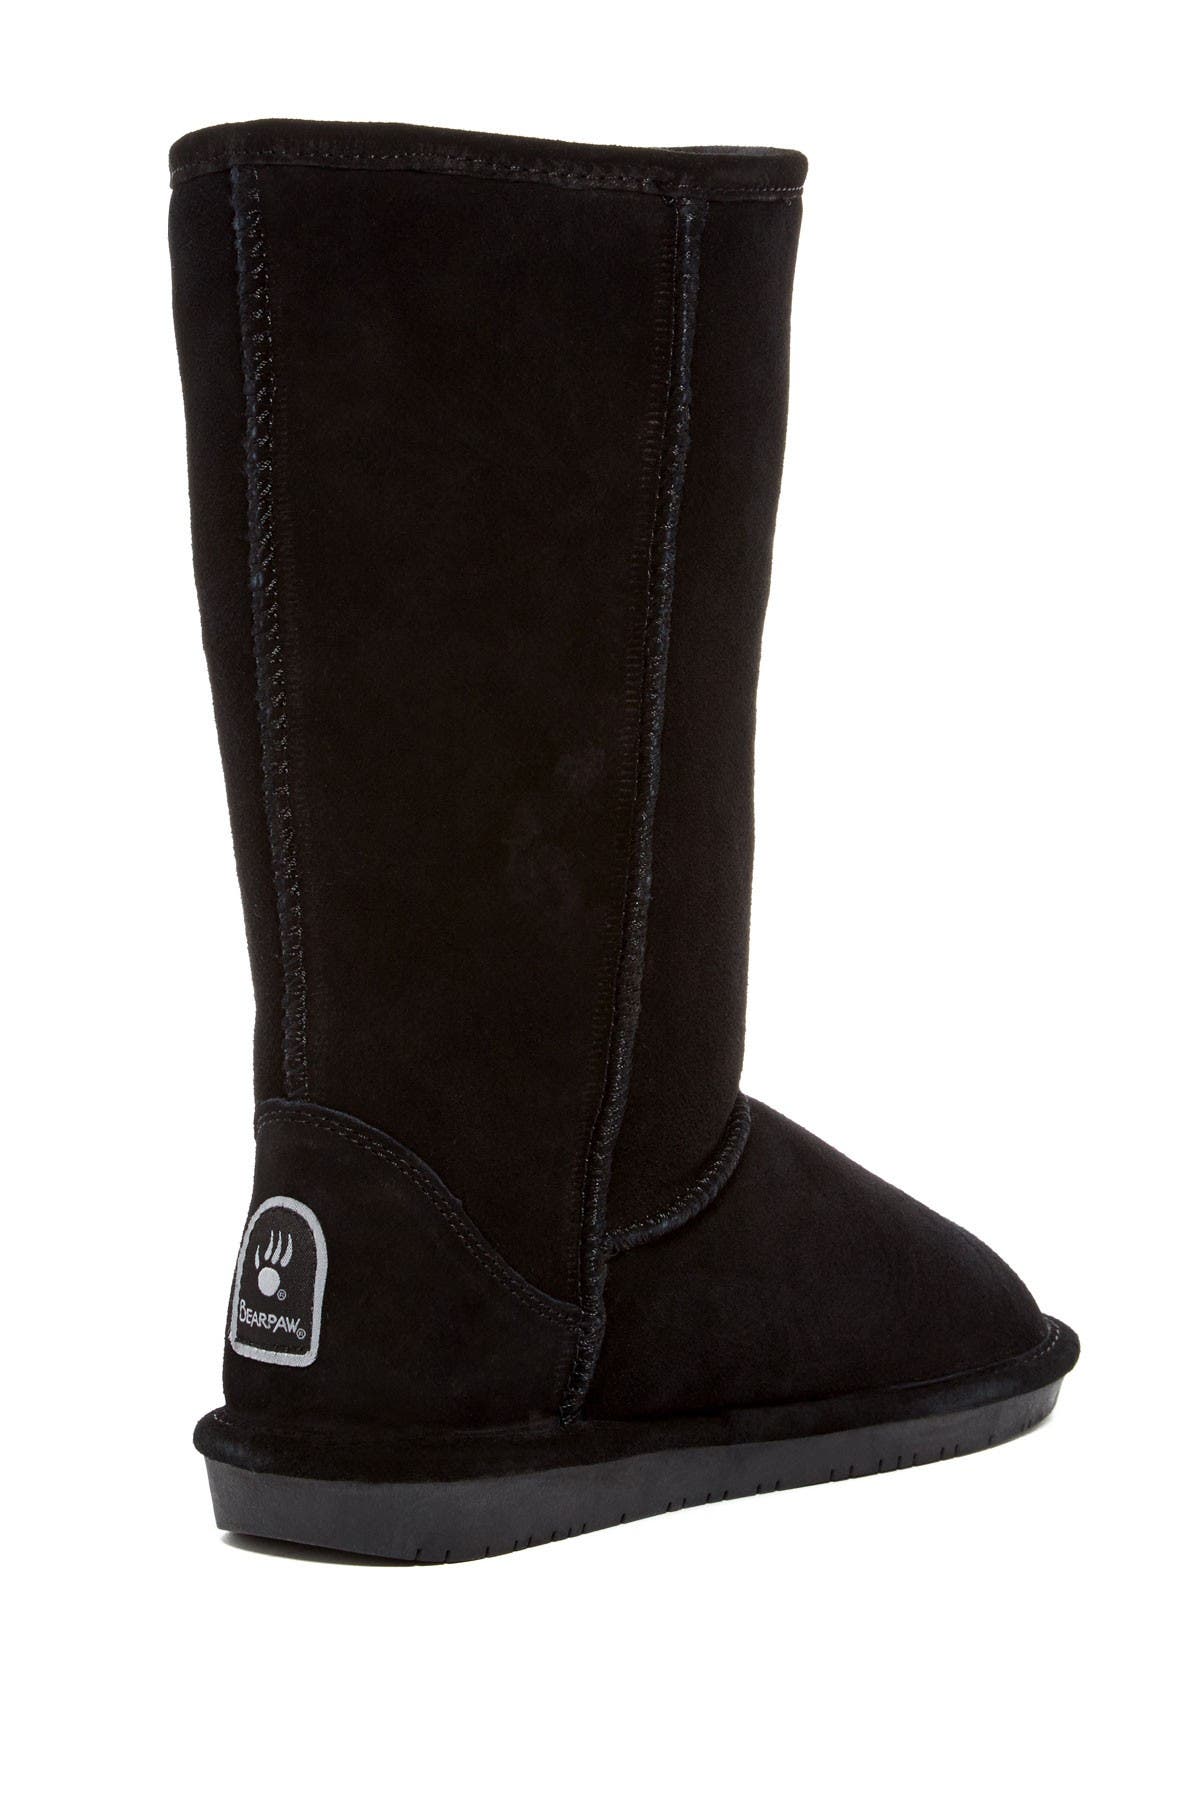 bearpaw emma tall boots on sale